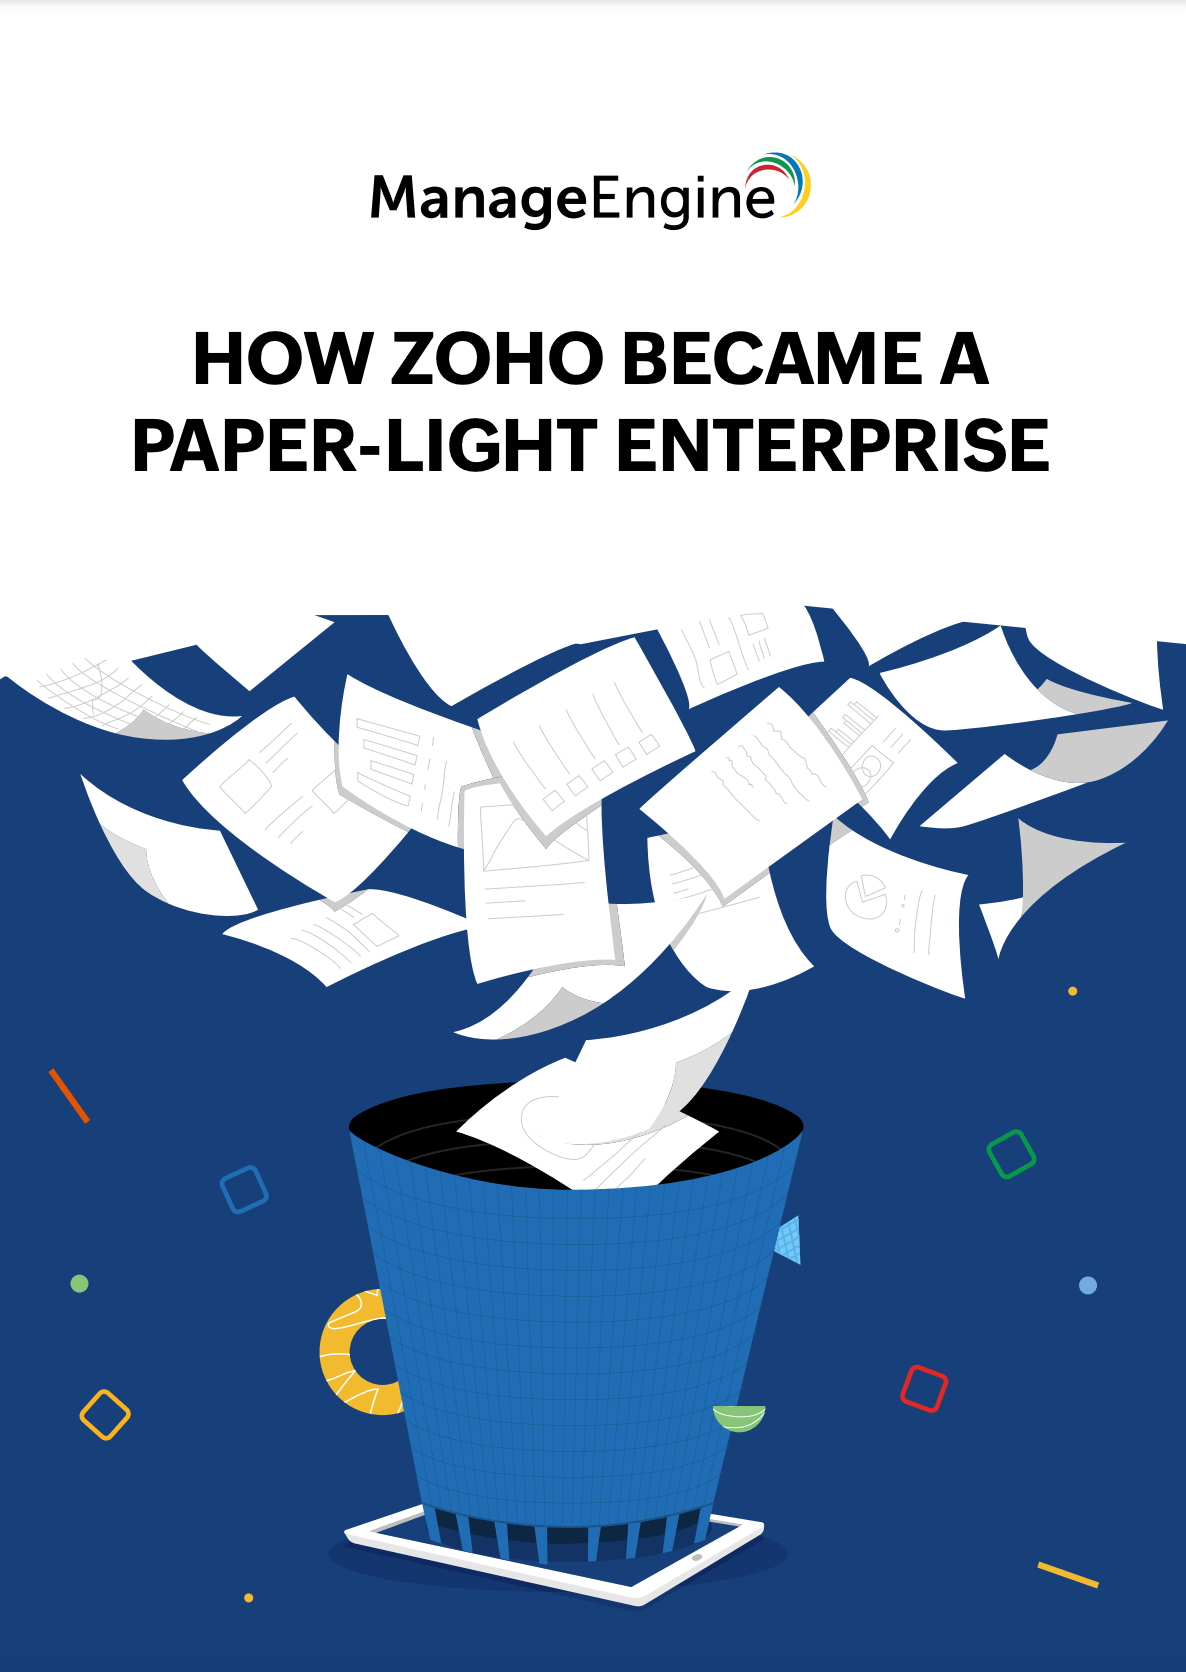 Zoho's digital transformation journey